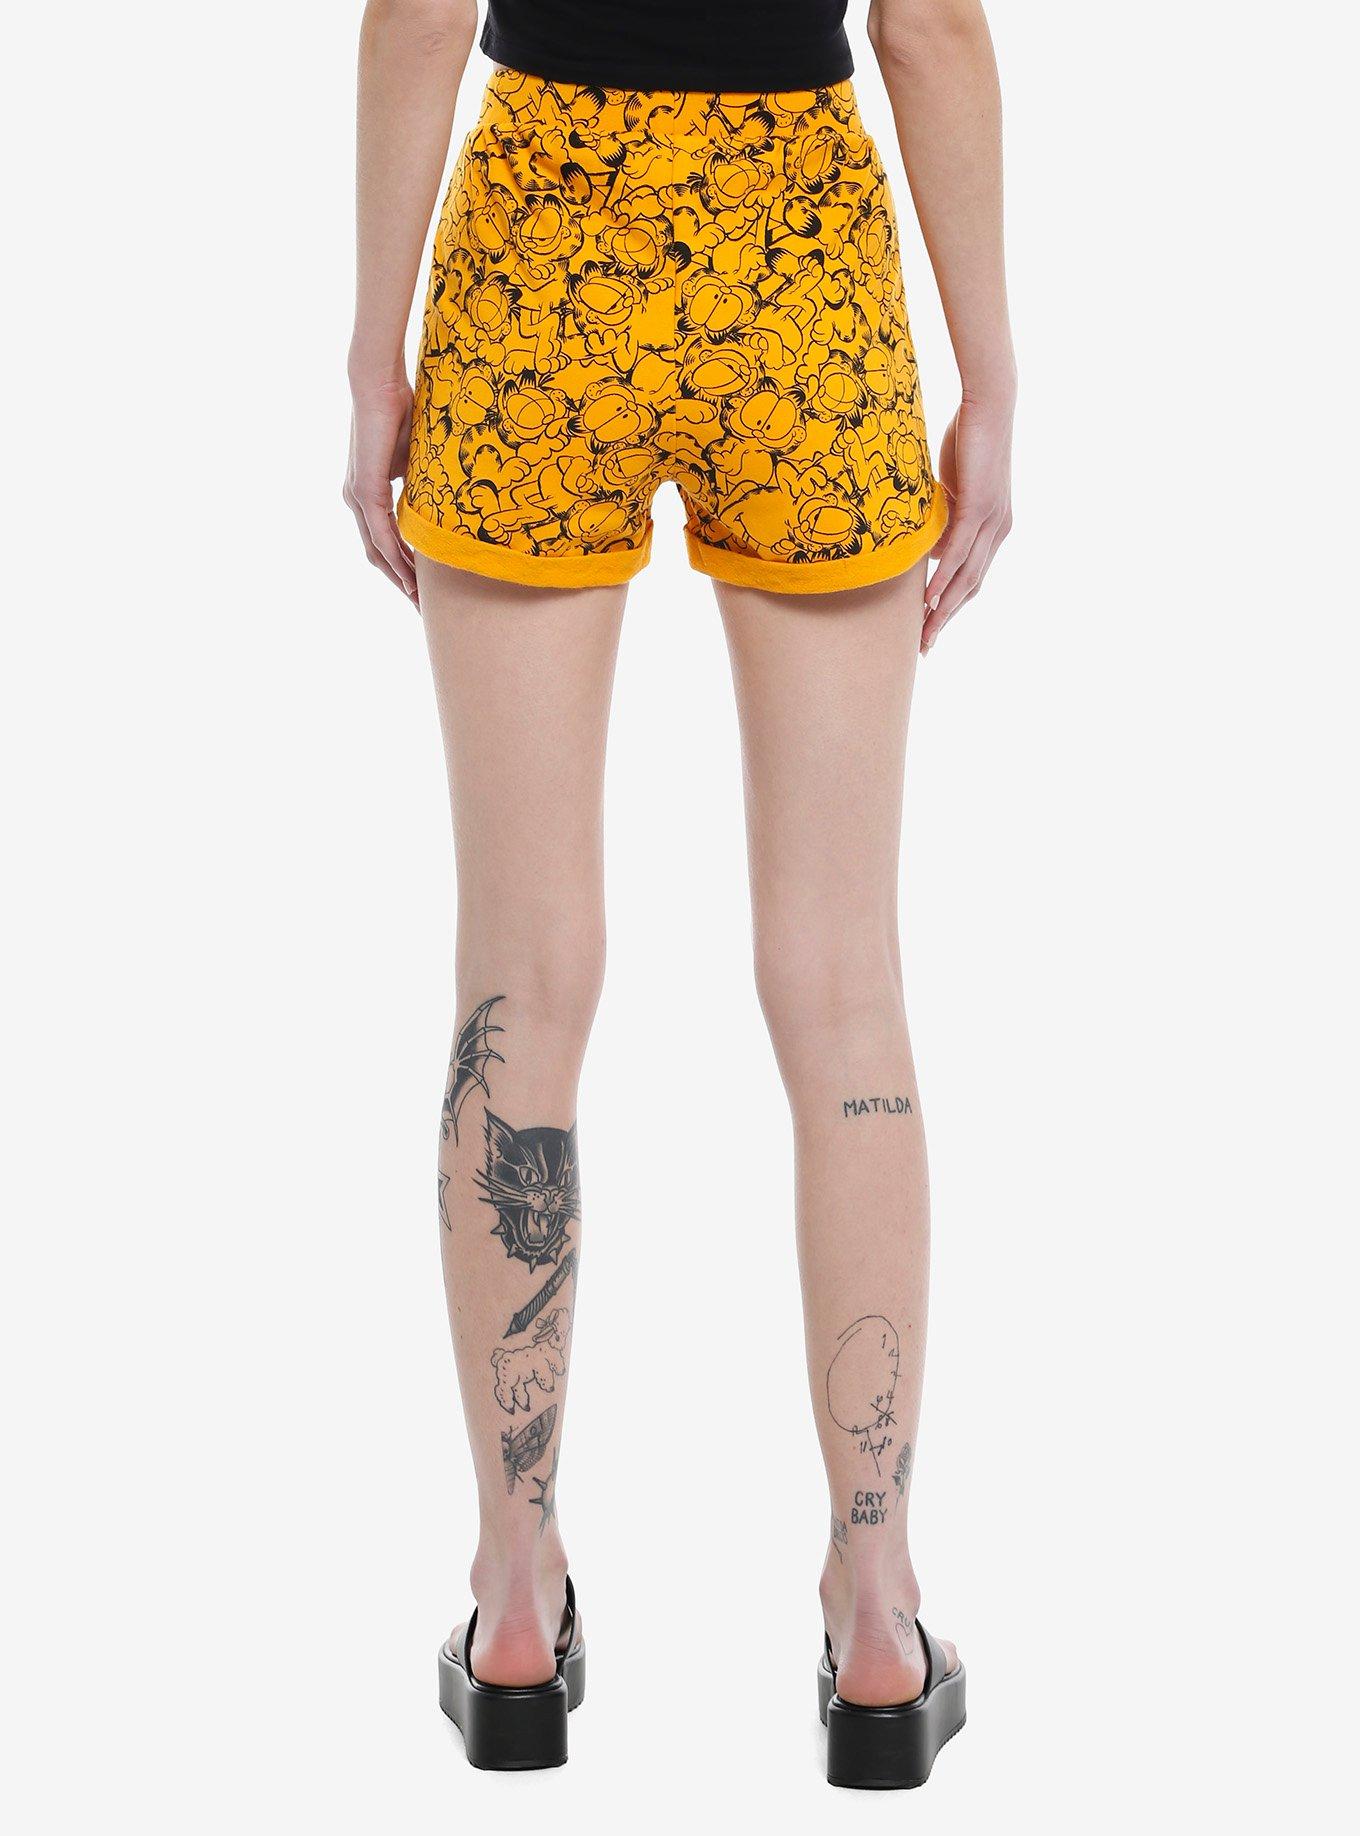 Garfield Allover Print Girls Lounge Shorts, ORANGE, alternate